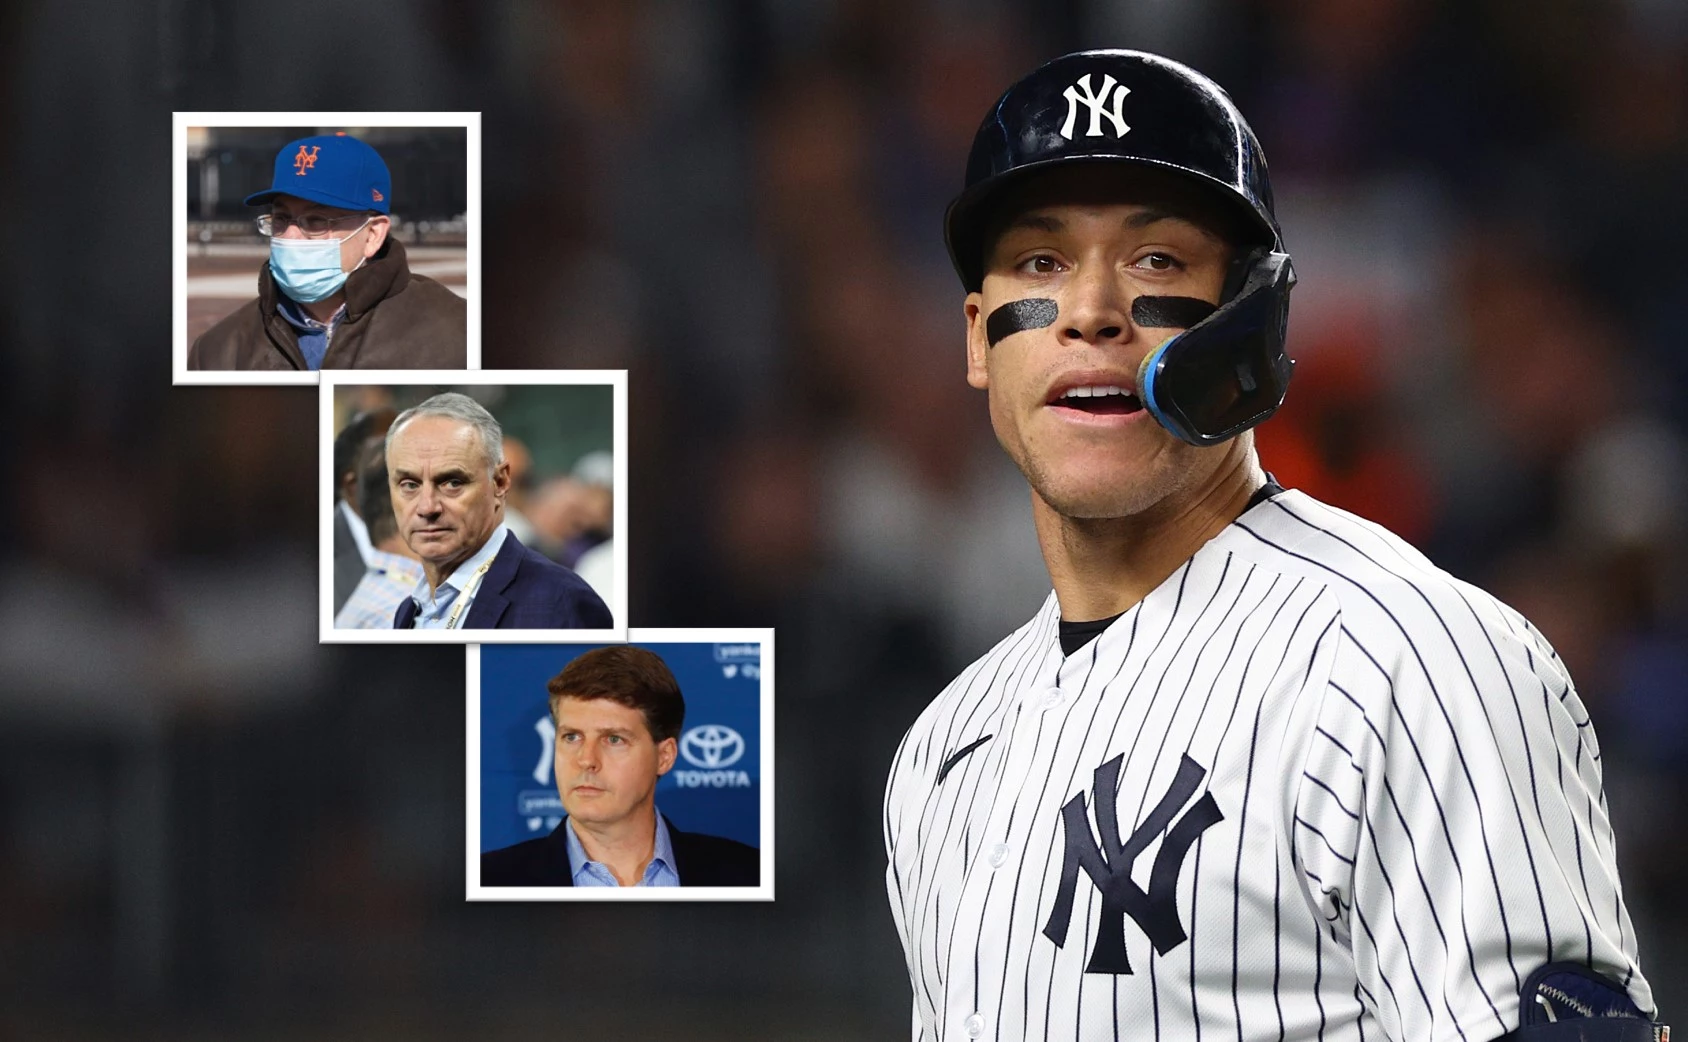 Andy Pettitte - New York Yankees Starting Pitcher - ESPN